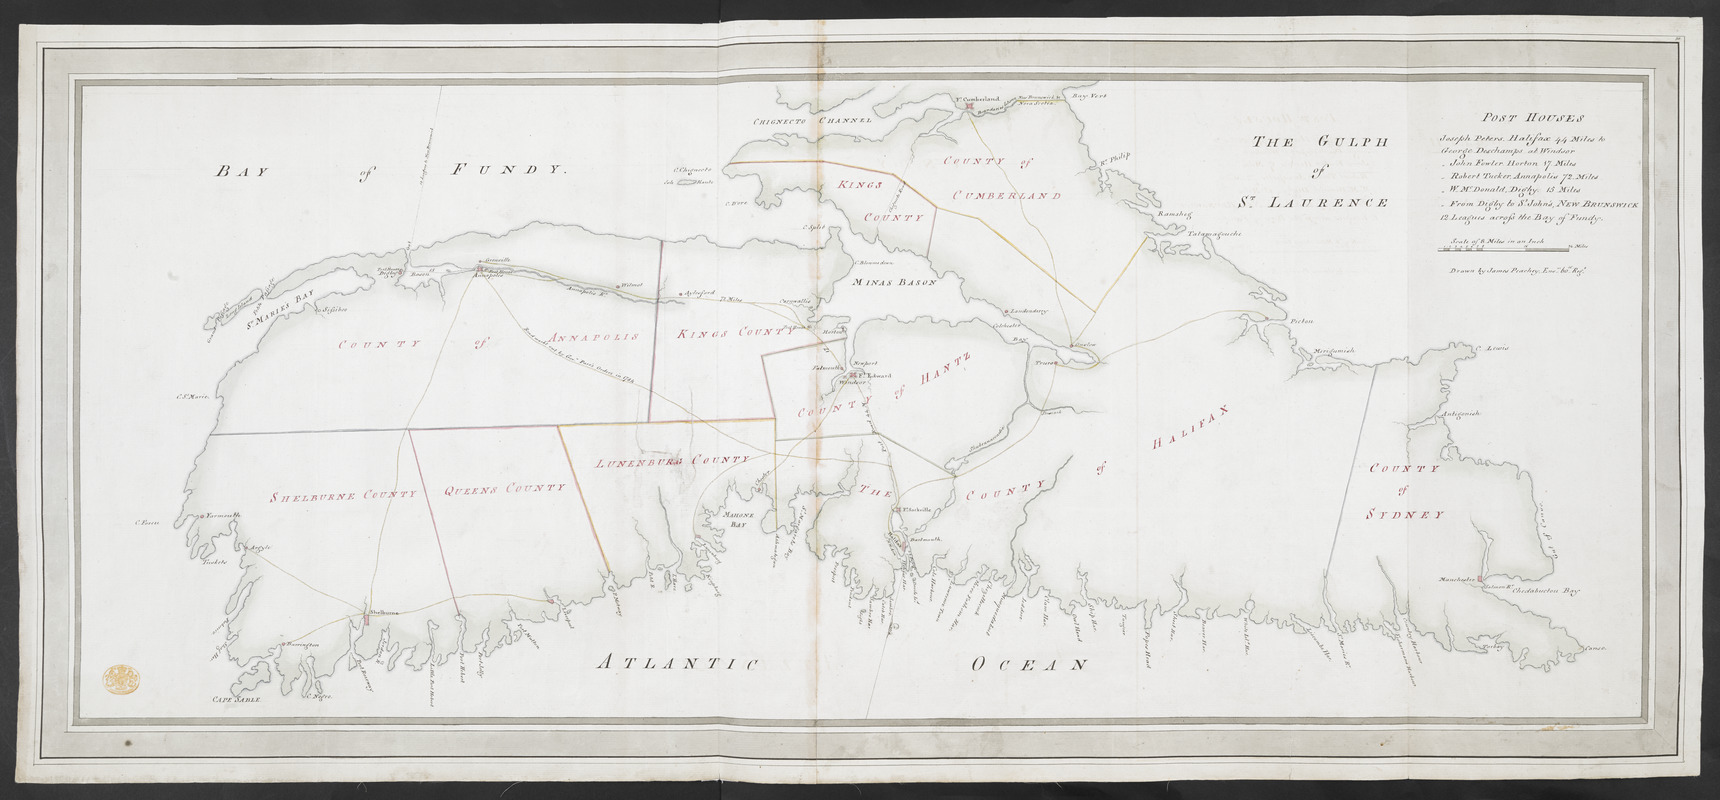 [A map of Nova Scotia showing the post roads]